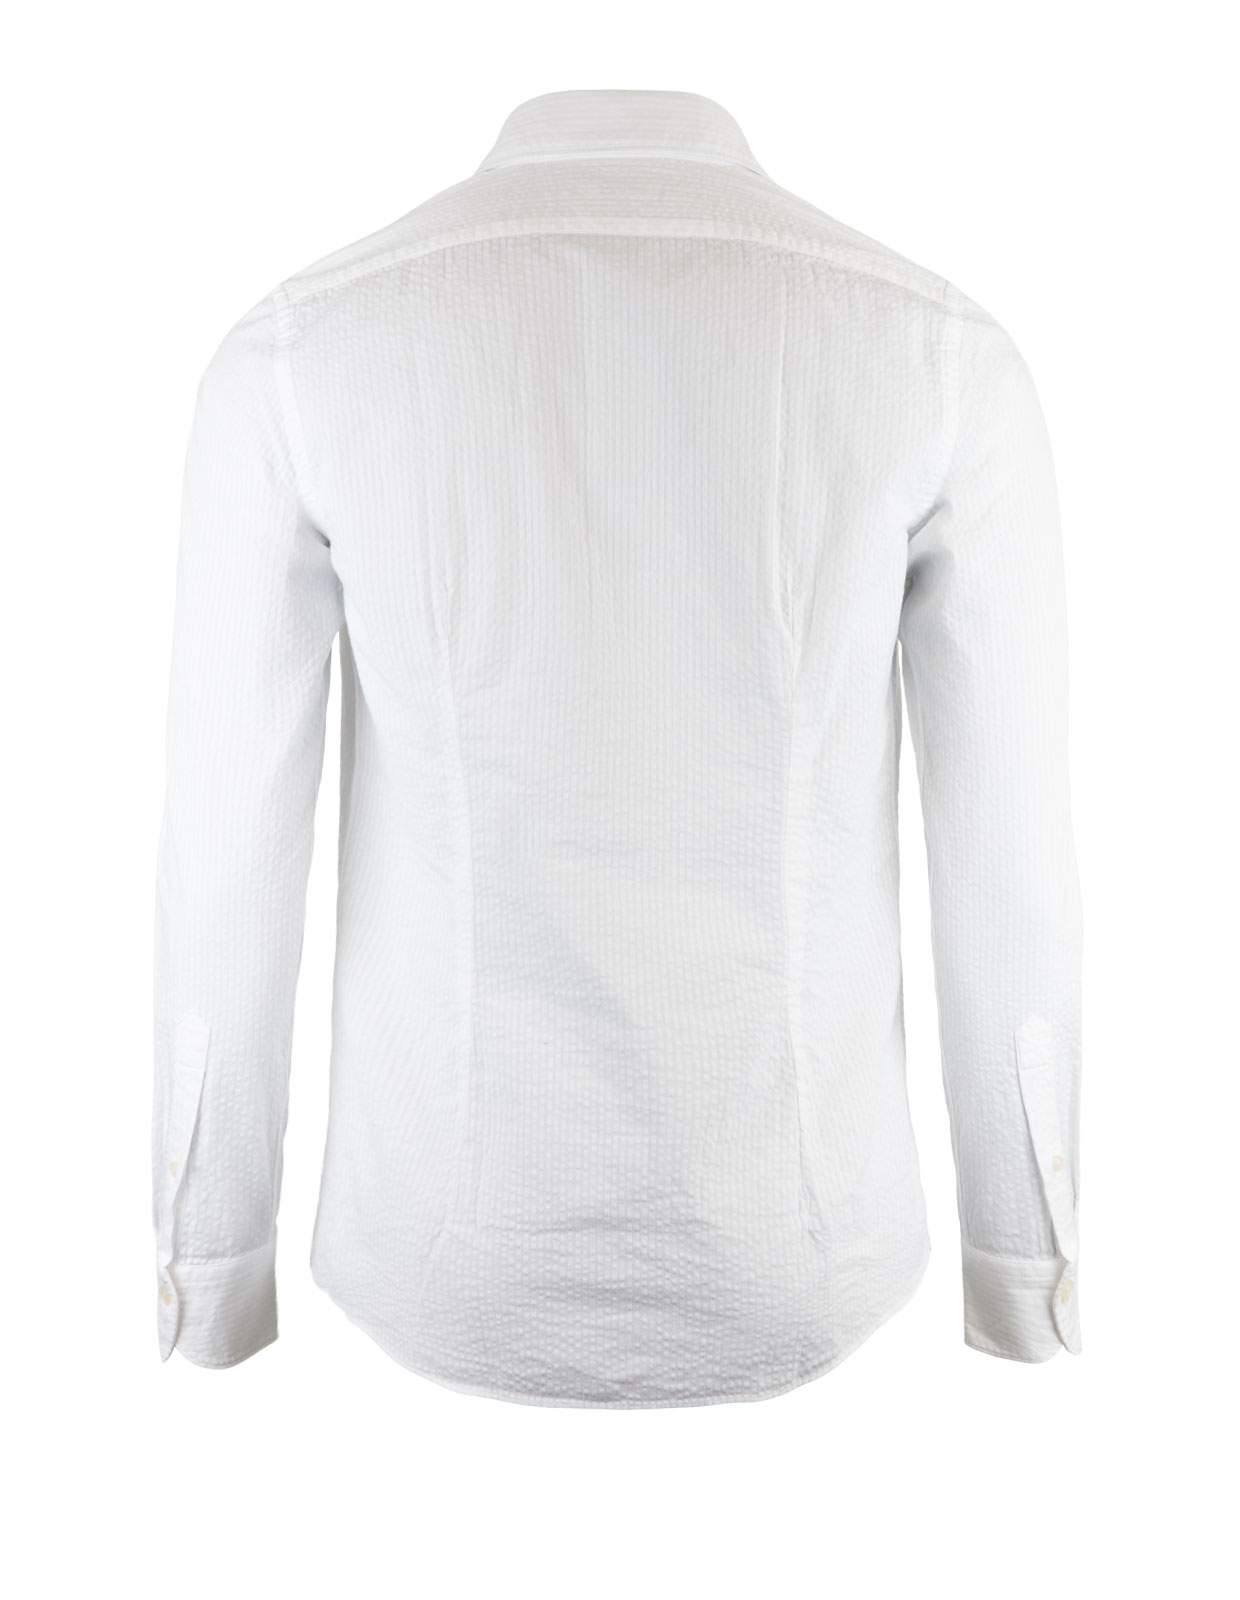 Seersucker Shirt White